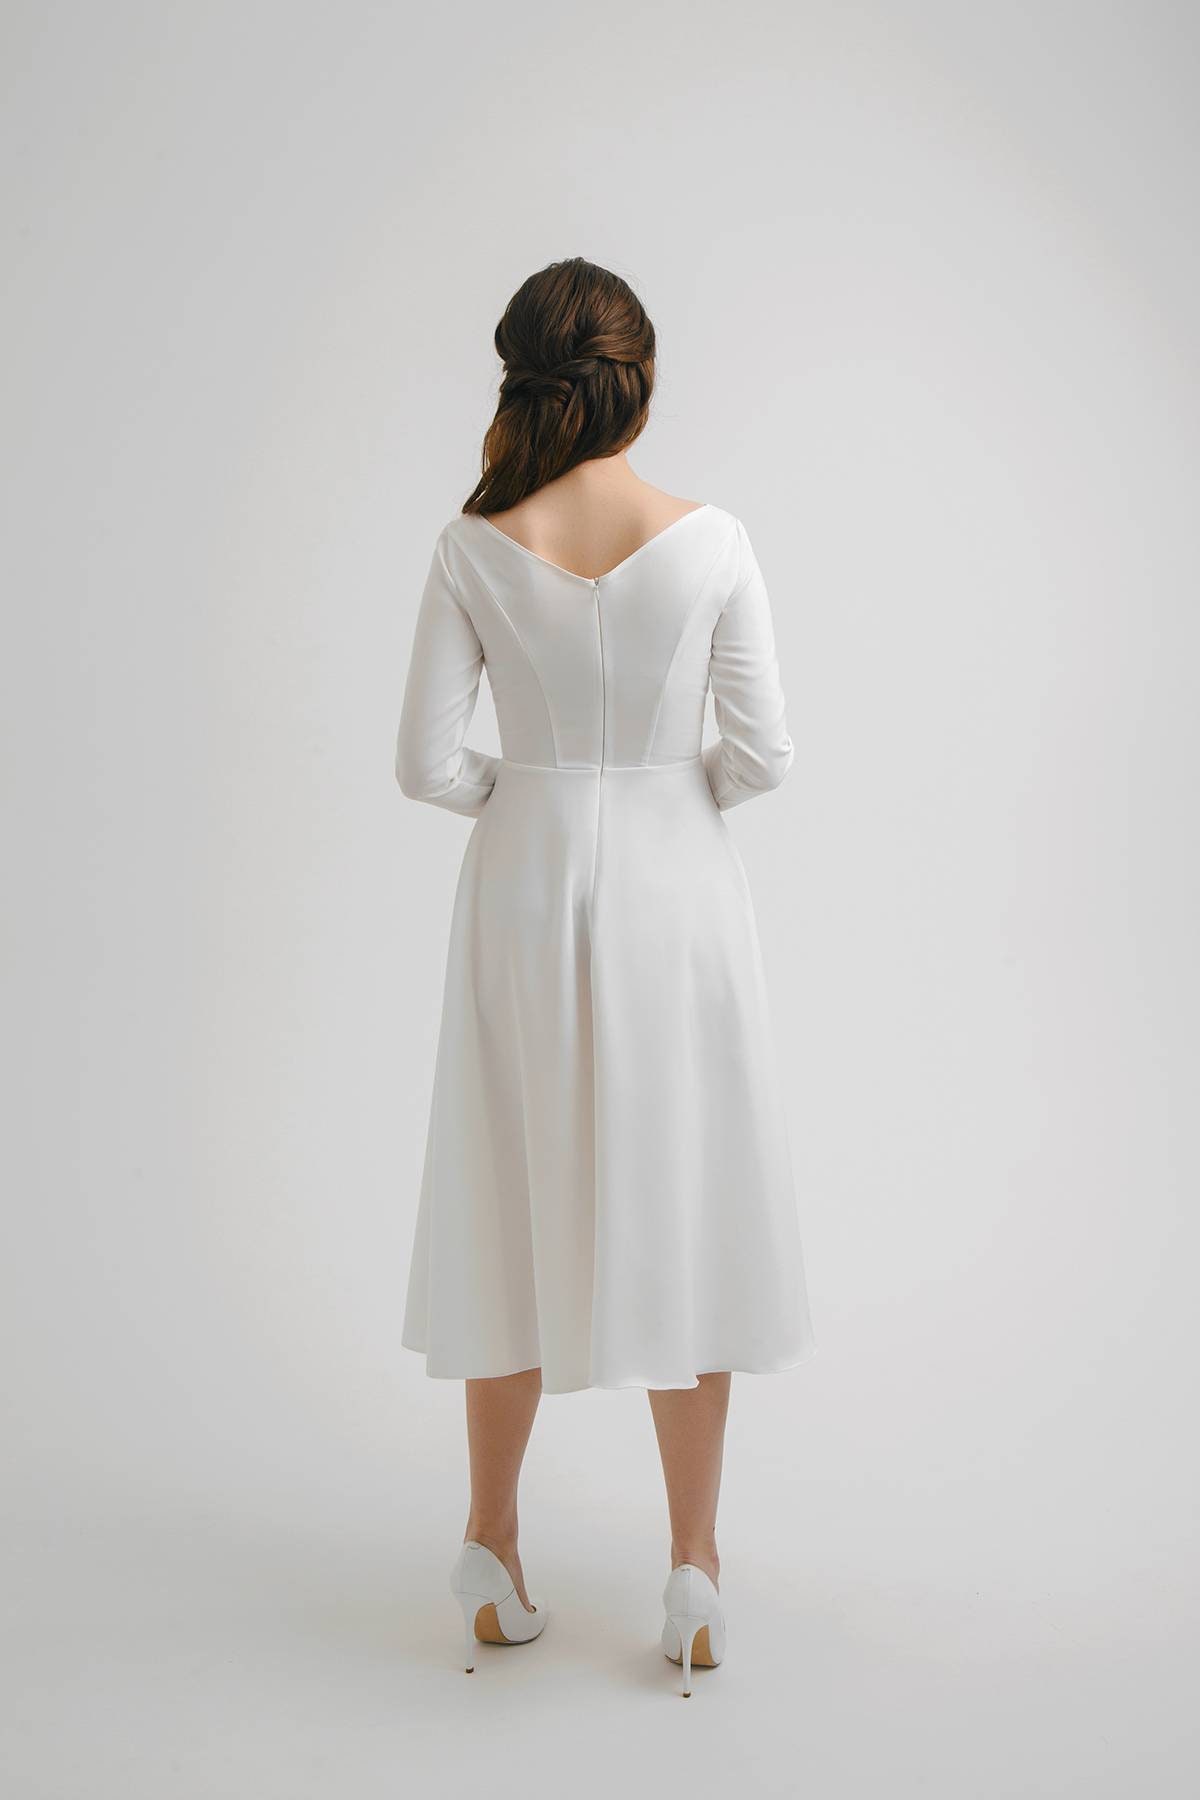 TEA LENGTH Long Sleeves Wedding Dress Made to Measure | Etsy